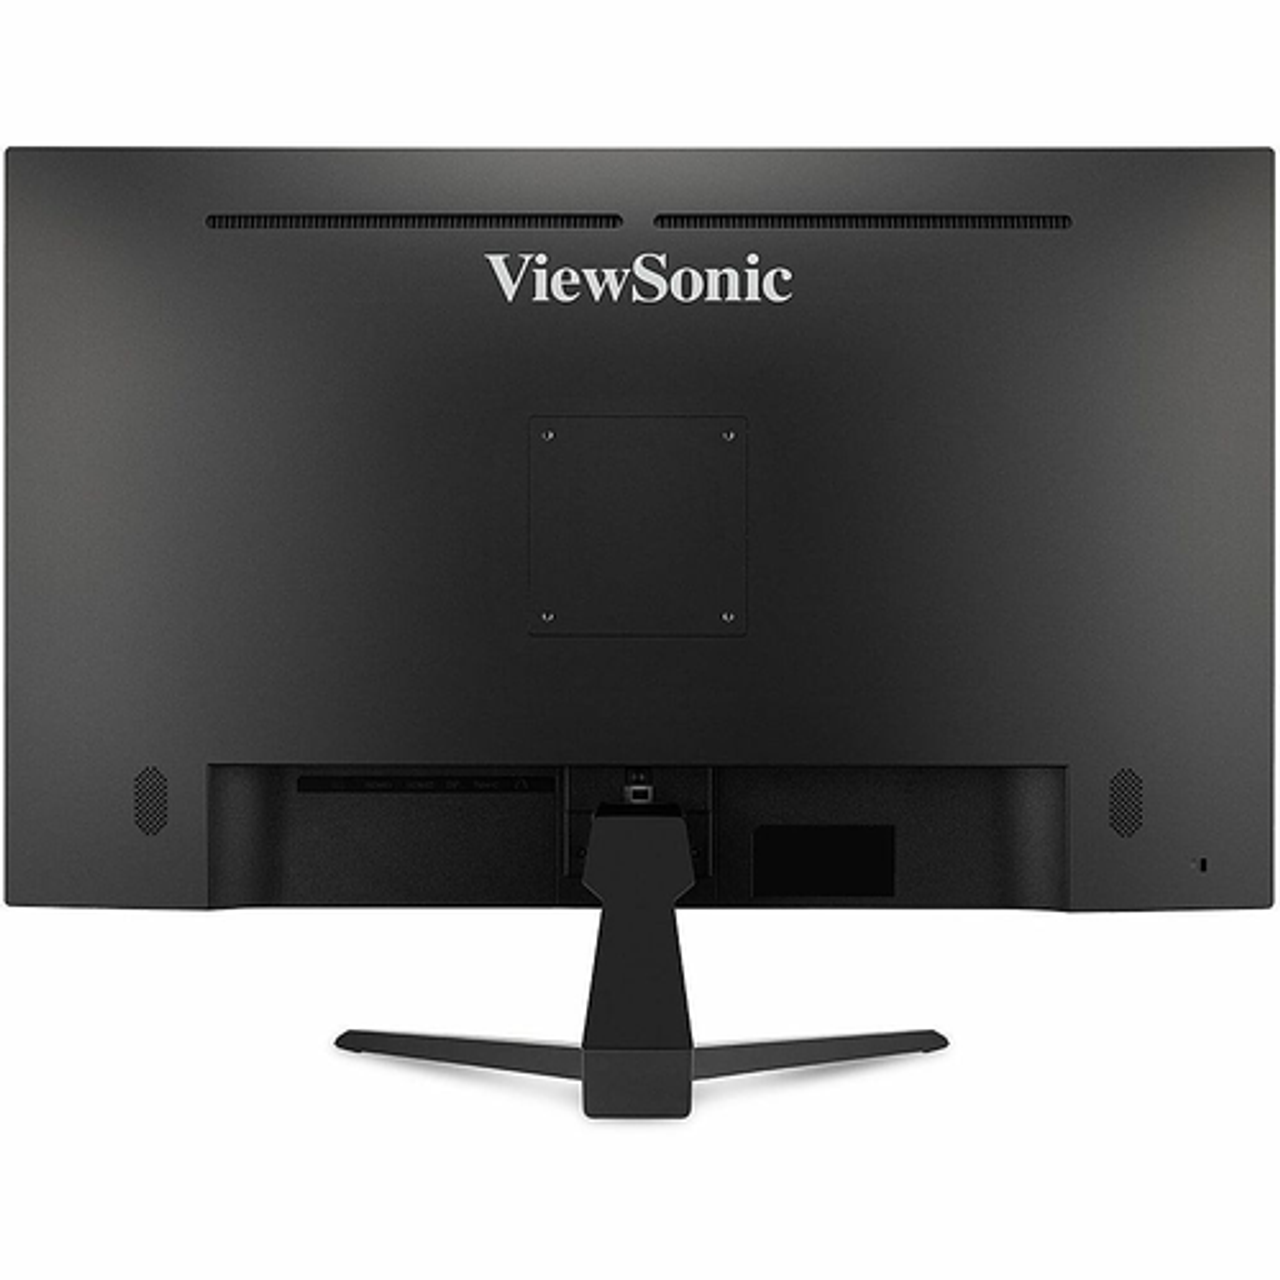 ViewSonic - VX3267U-4K 32" IPS UHD Monitor (Display Port, HDMI) - Black